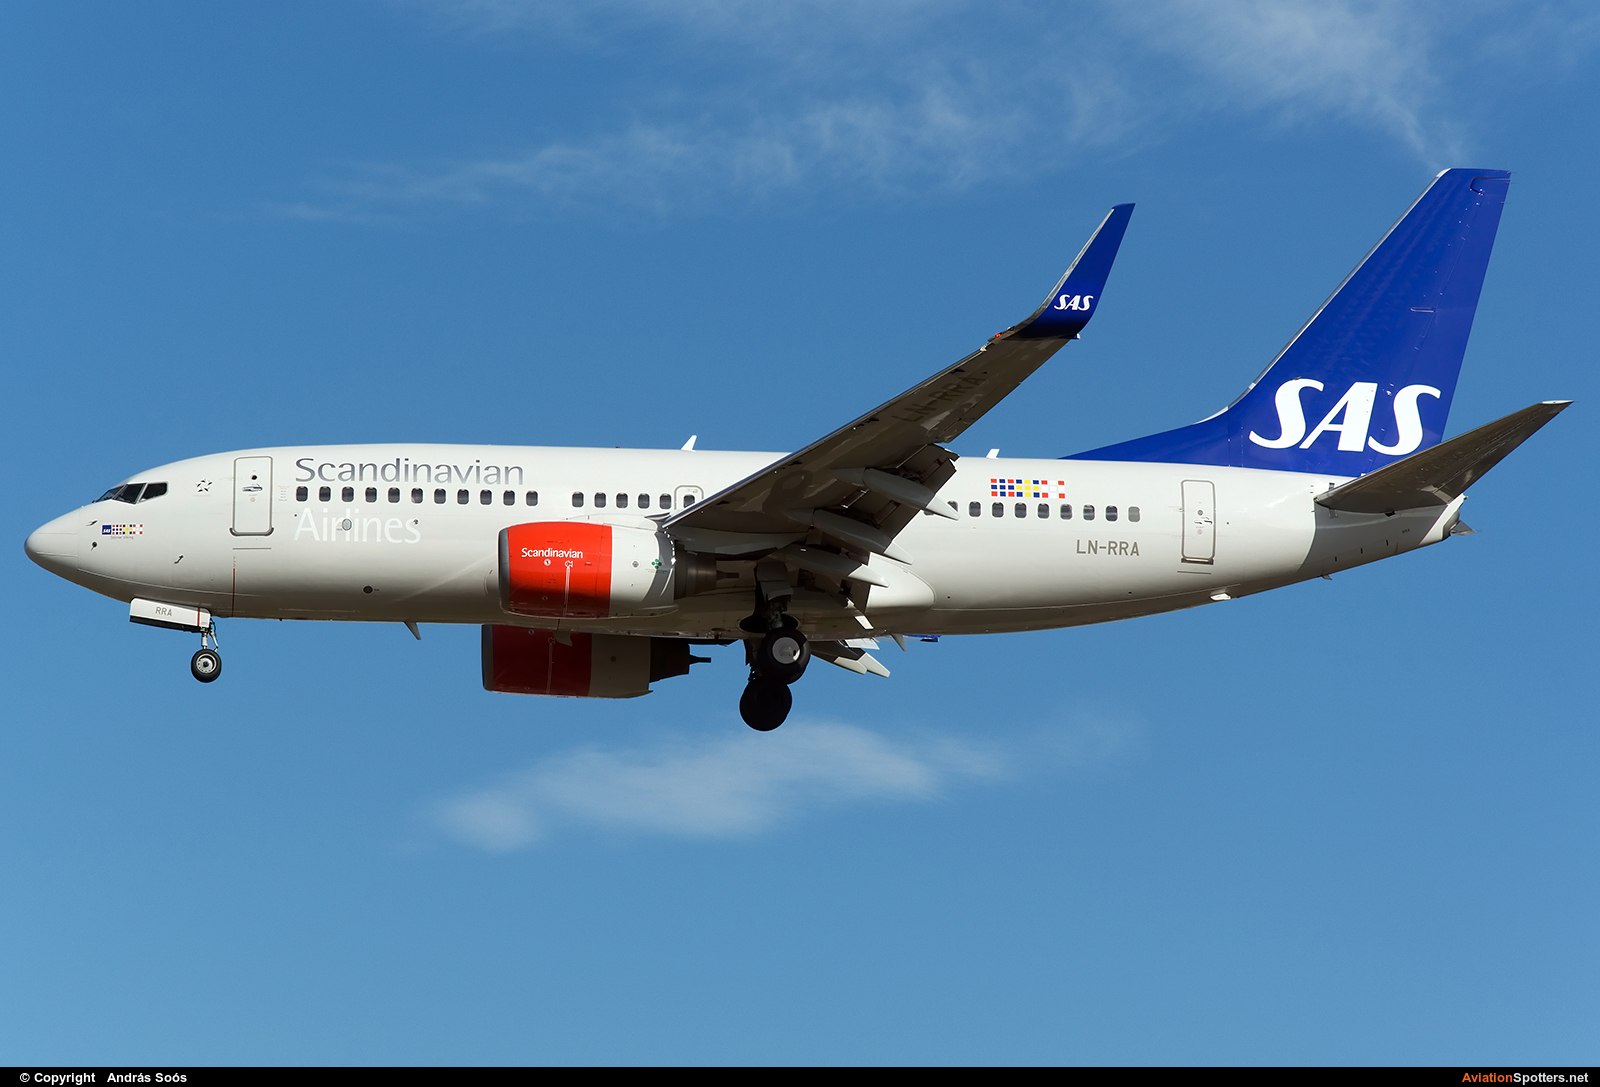 SAS - Scandinavian Airlines  -  737-800  (LN-RRA) By András Soós (sas1965)